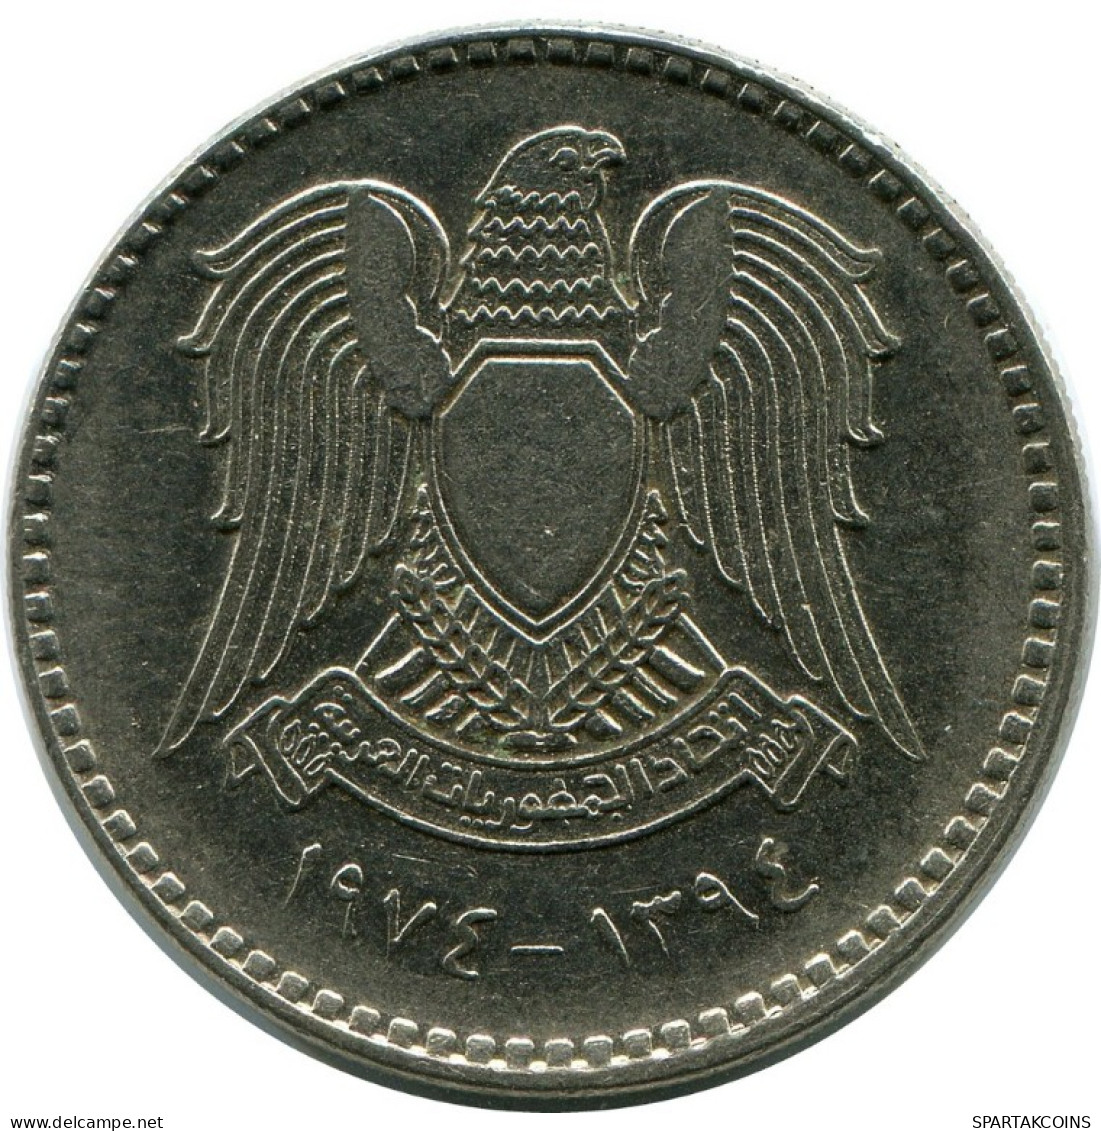 1 LIRA 1974 SYRIA Islamic Coin #AH656.3.U.A - Syria